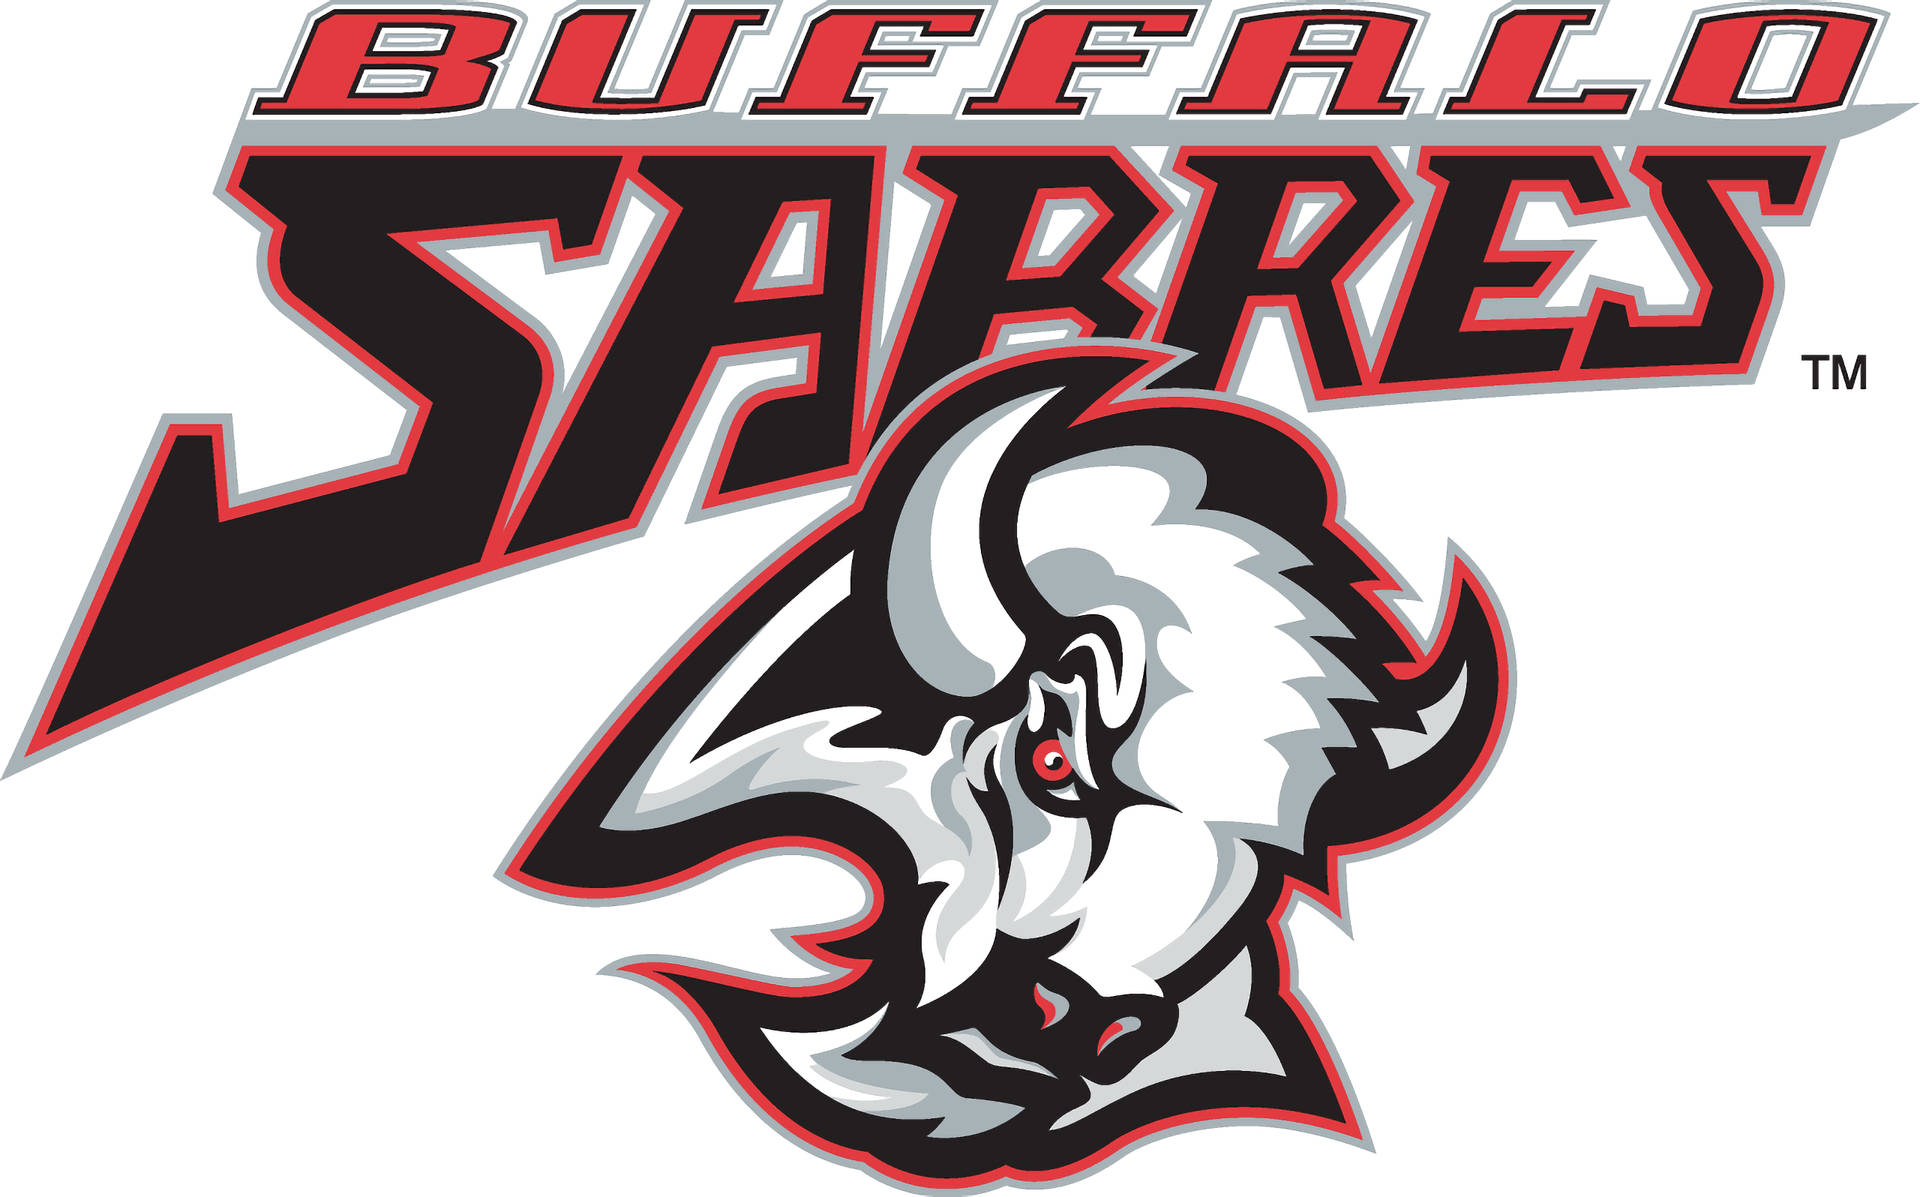 Buffalo Bills/Buffalo Sabres Wallpaper by SirMudbone on DeviantArt